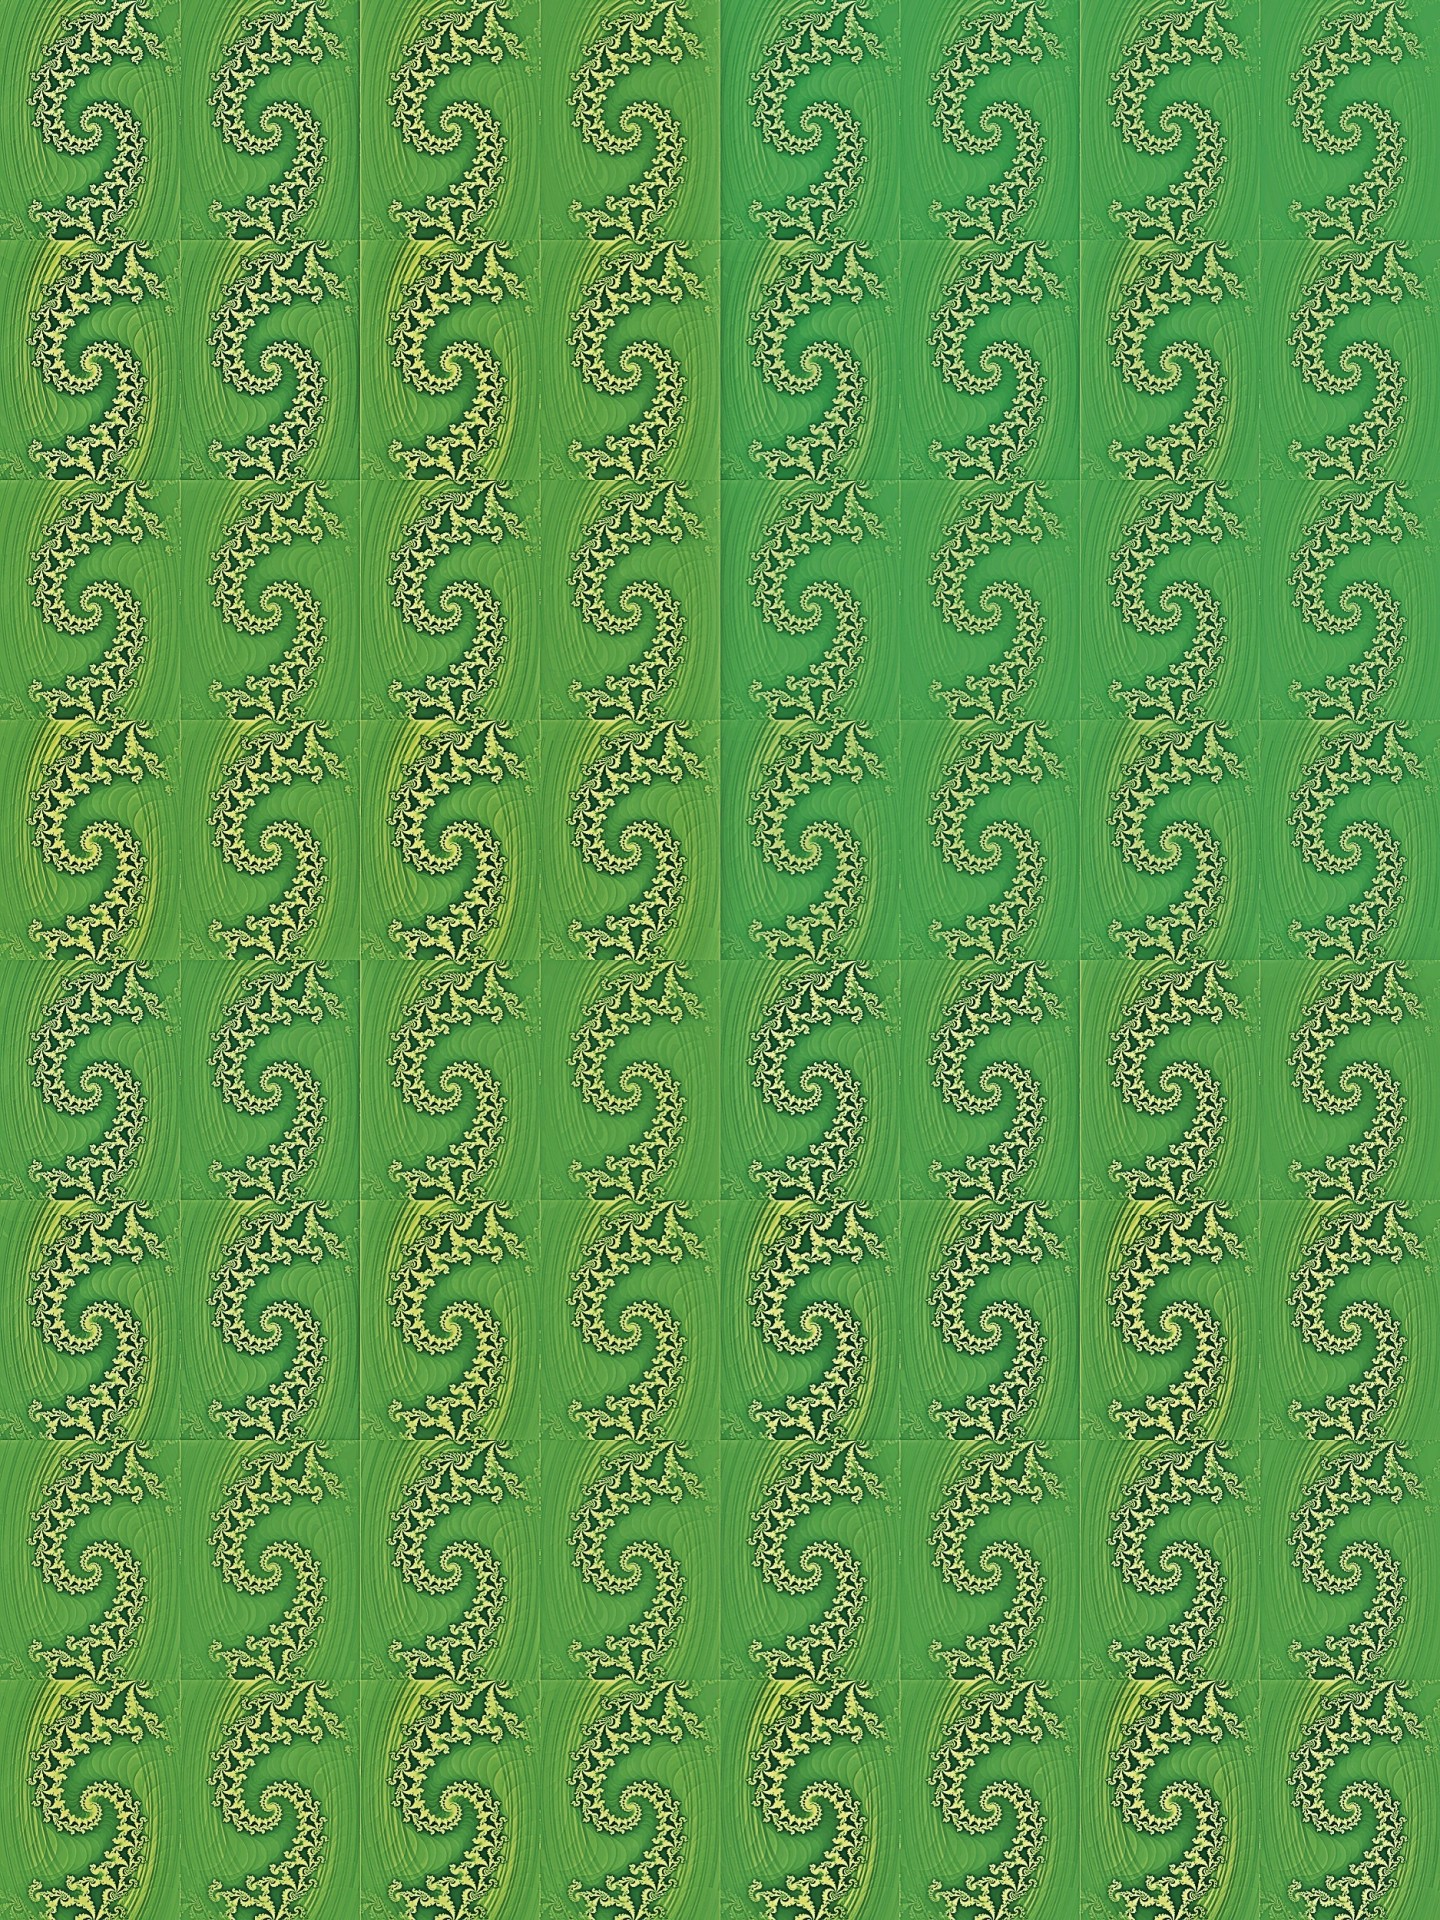 astronira fractal green free photo